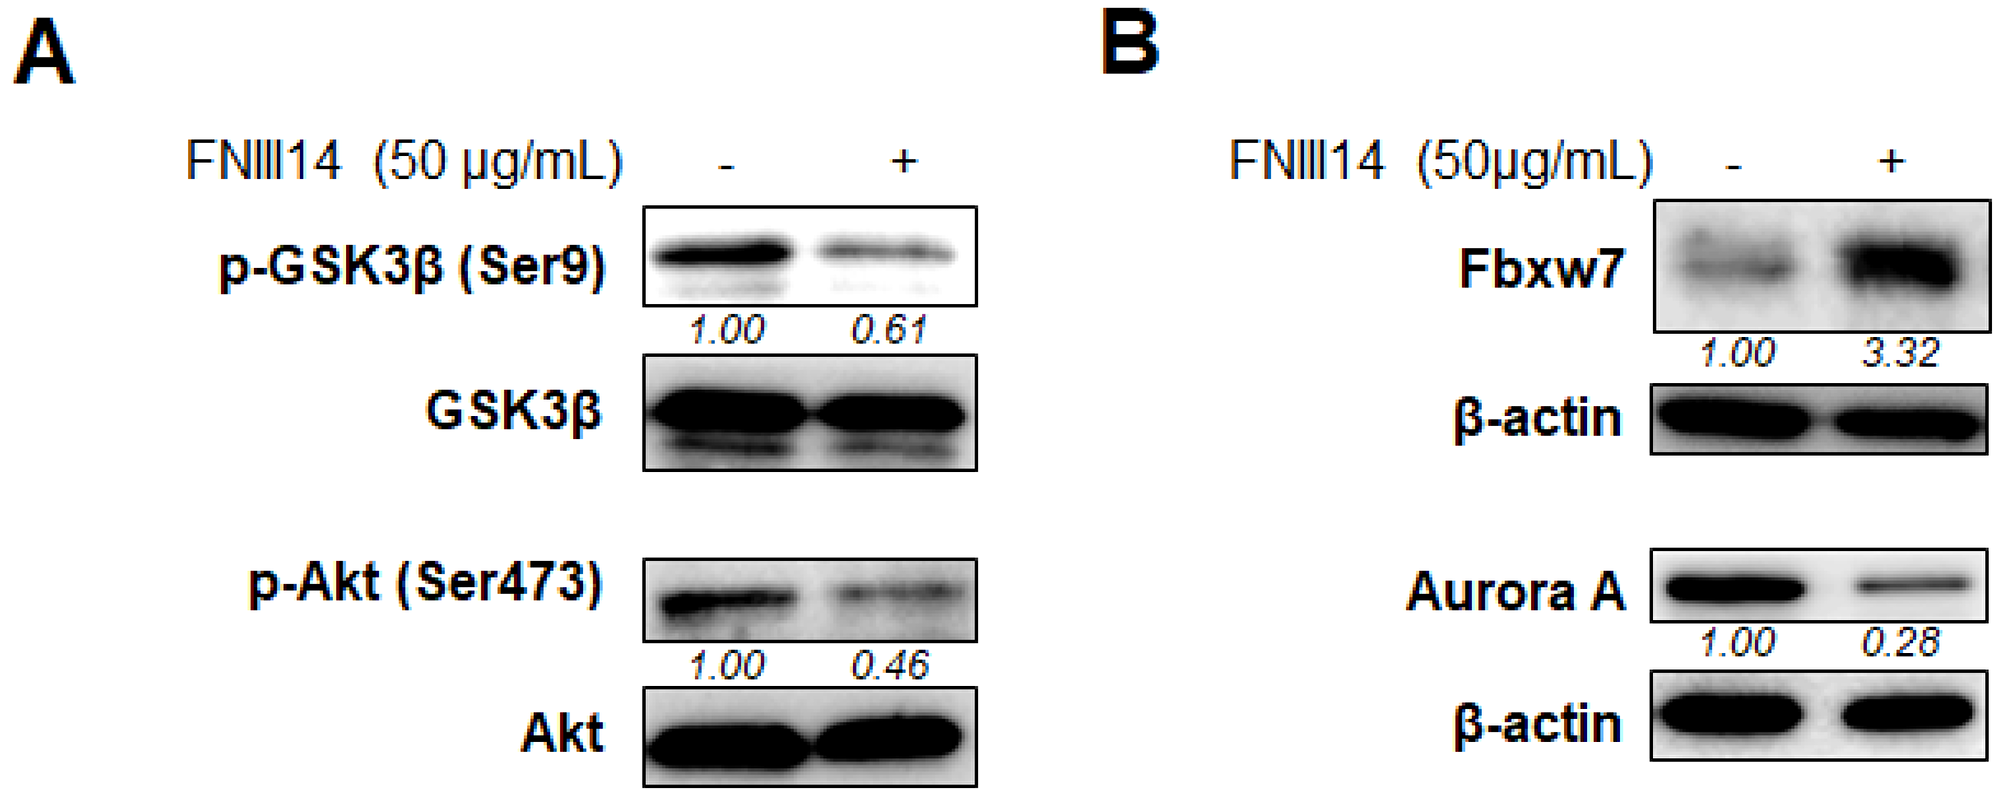 Molecular basis of proteasomal degradation of N-Myc protein induced by FNIII14.